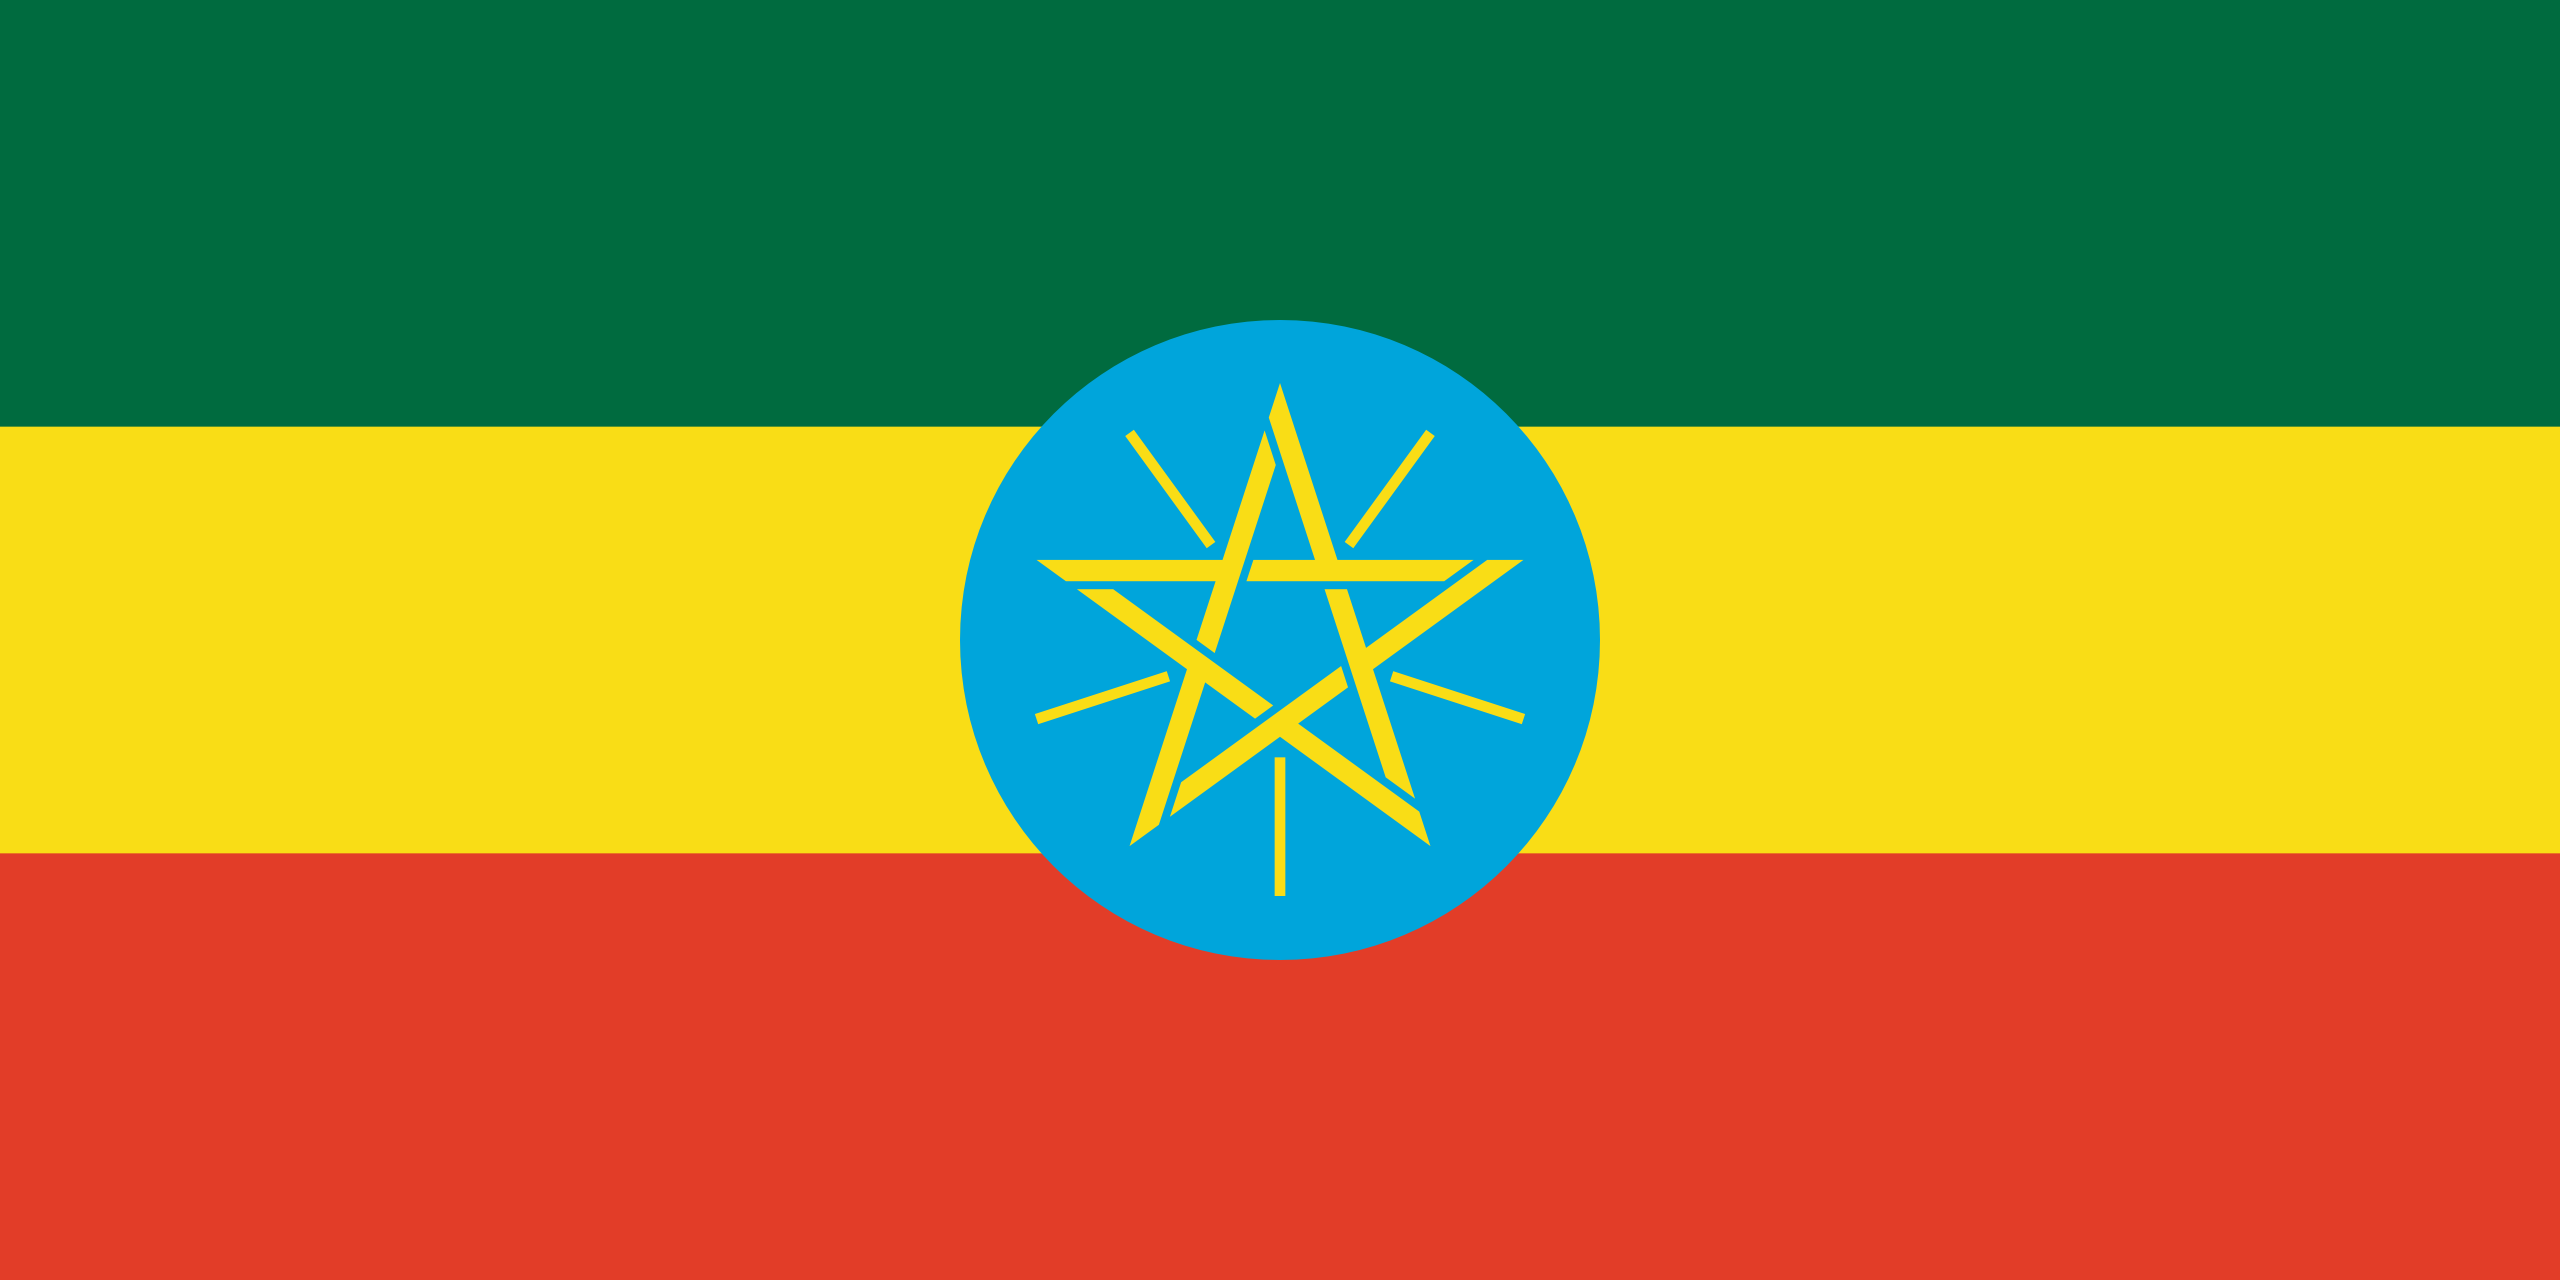 Ethiopia's flag